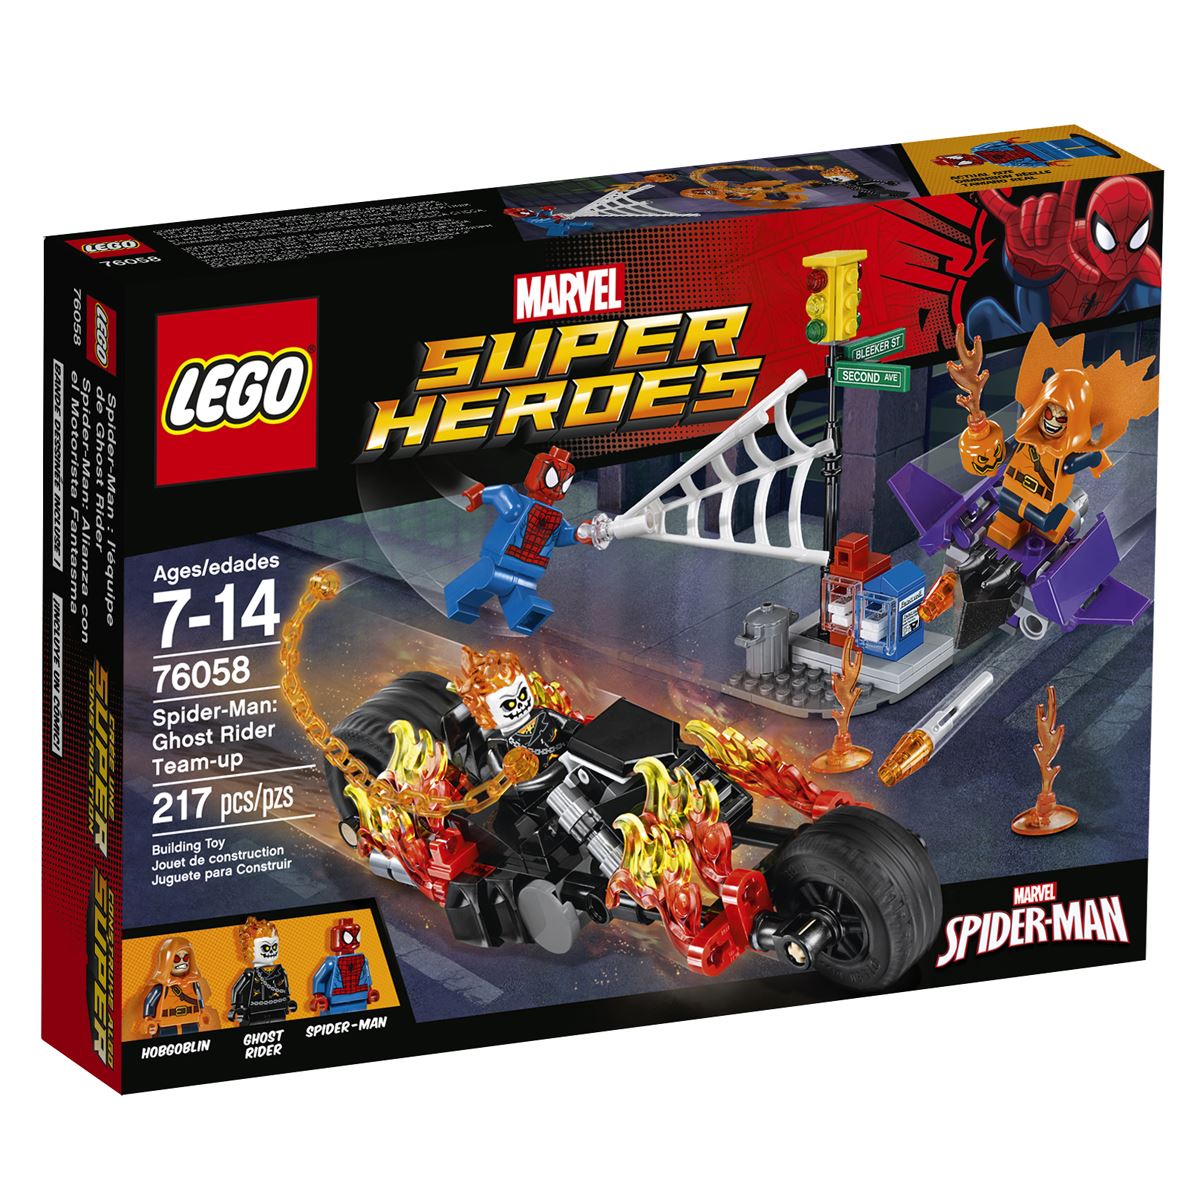 LEGO - Super Heroes - Spider-Man: Ghost Rider Team-up